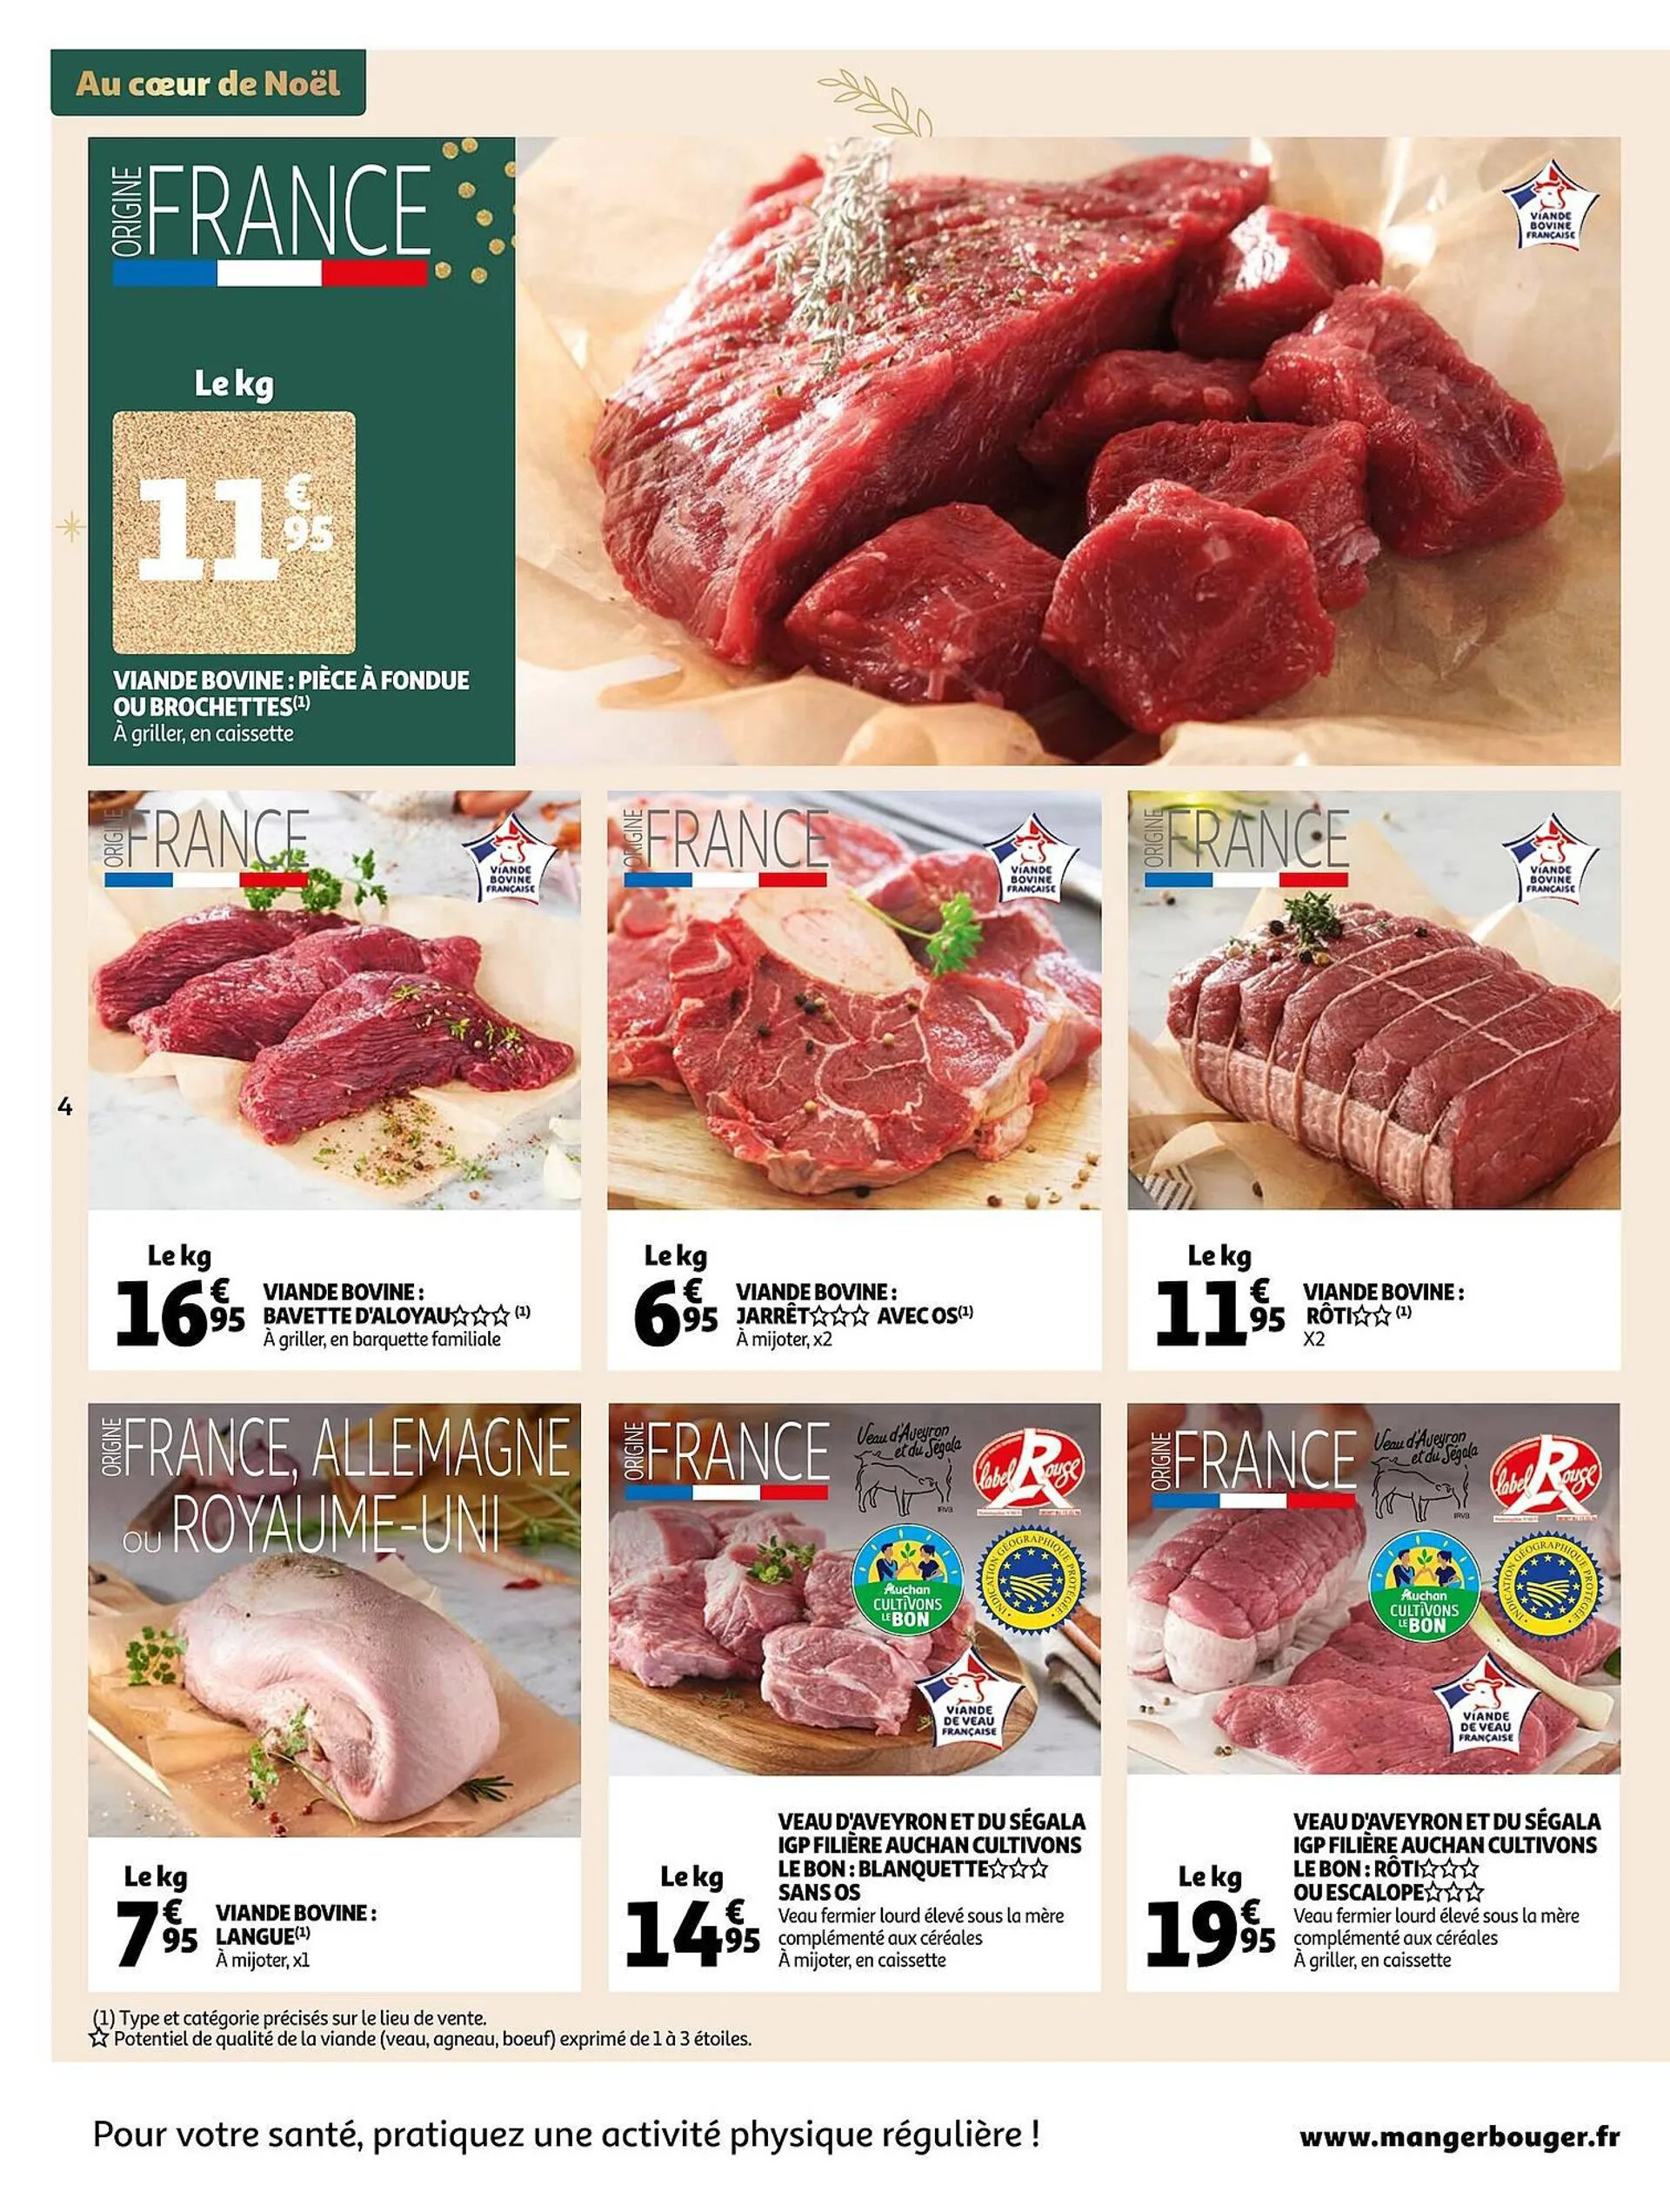 Catalogue Auchan - 4